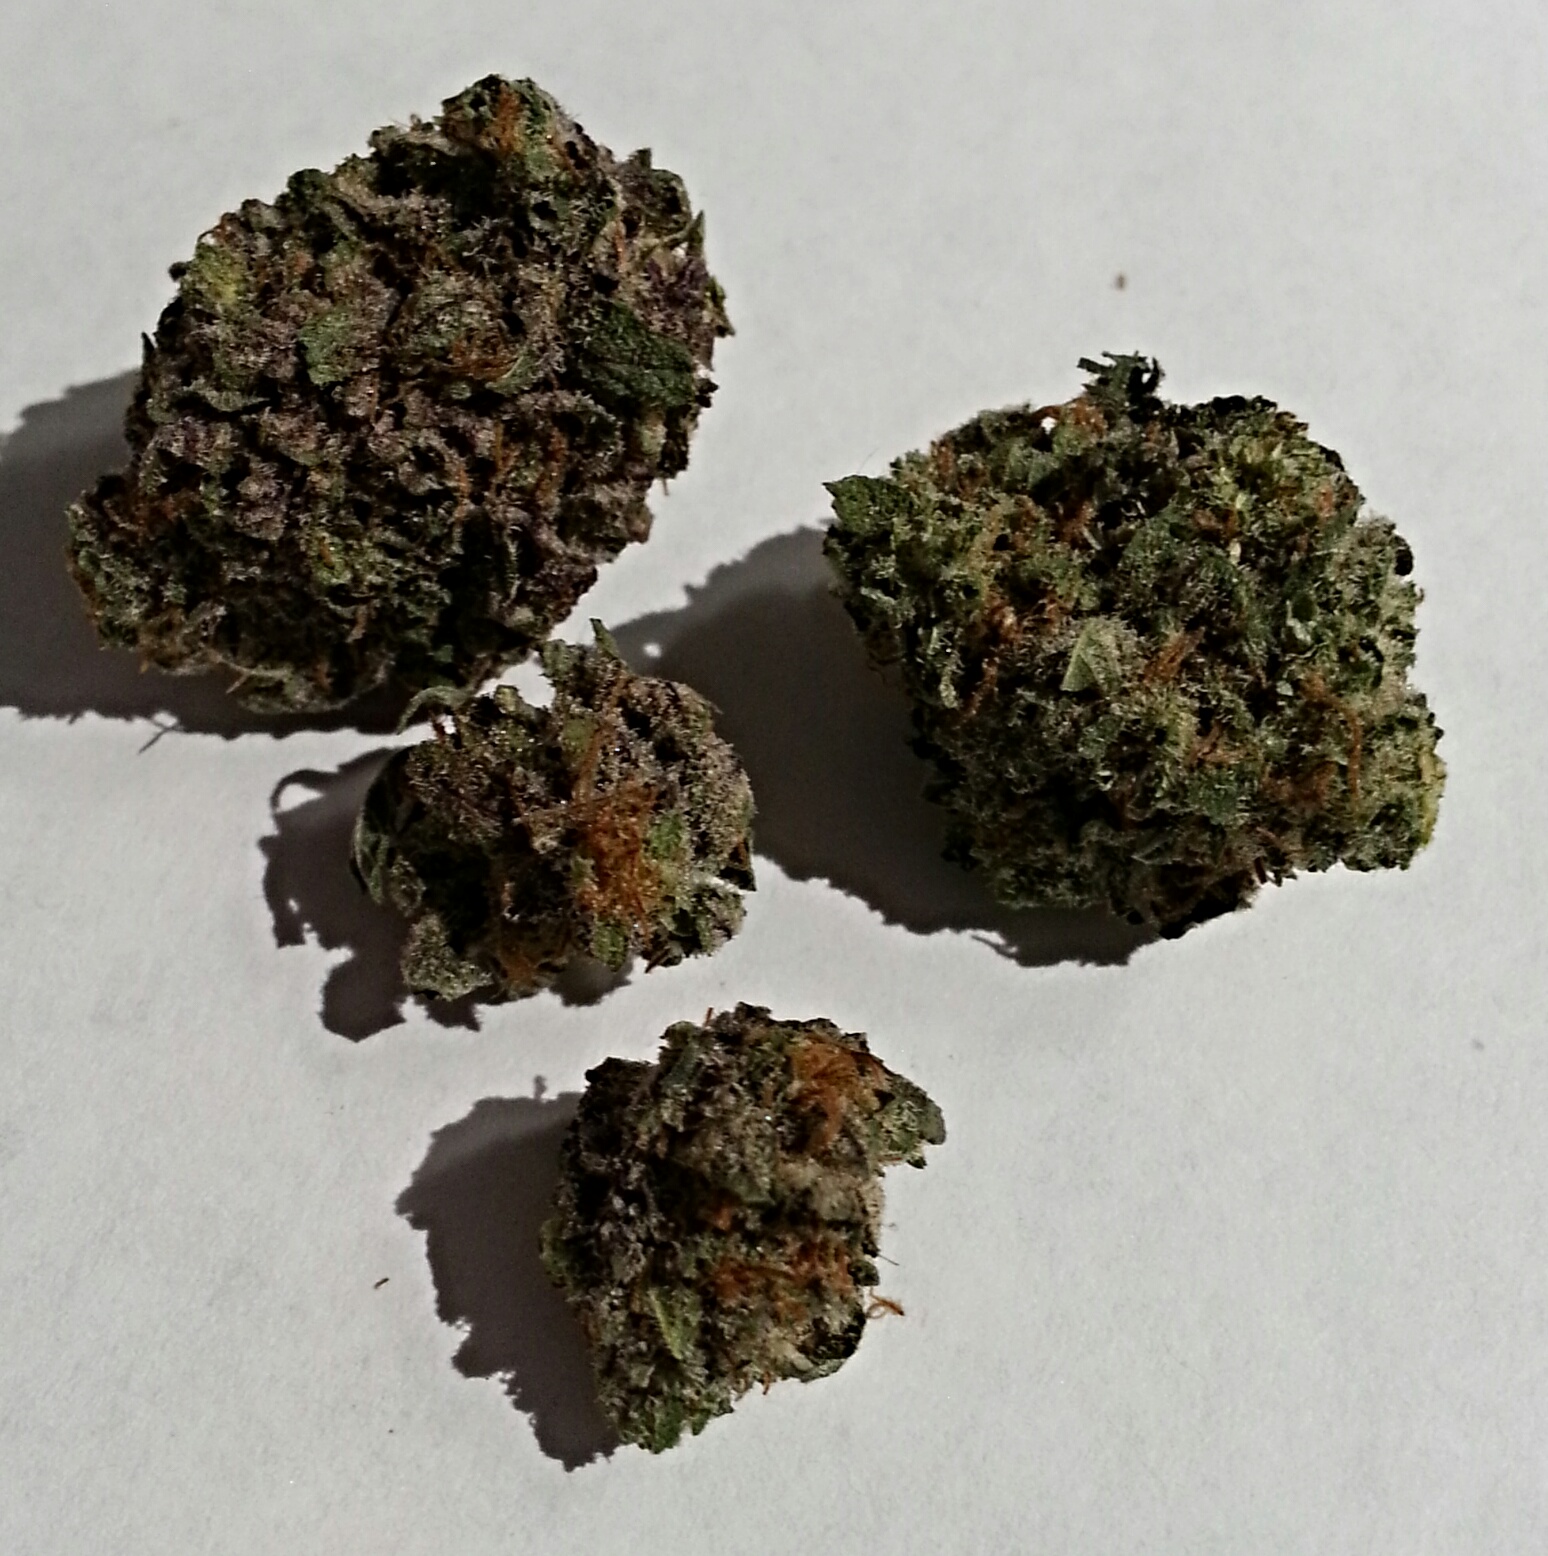 Strawberry Cough from Dank Depot Medical Marijuana Review